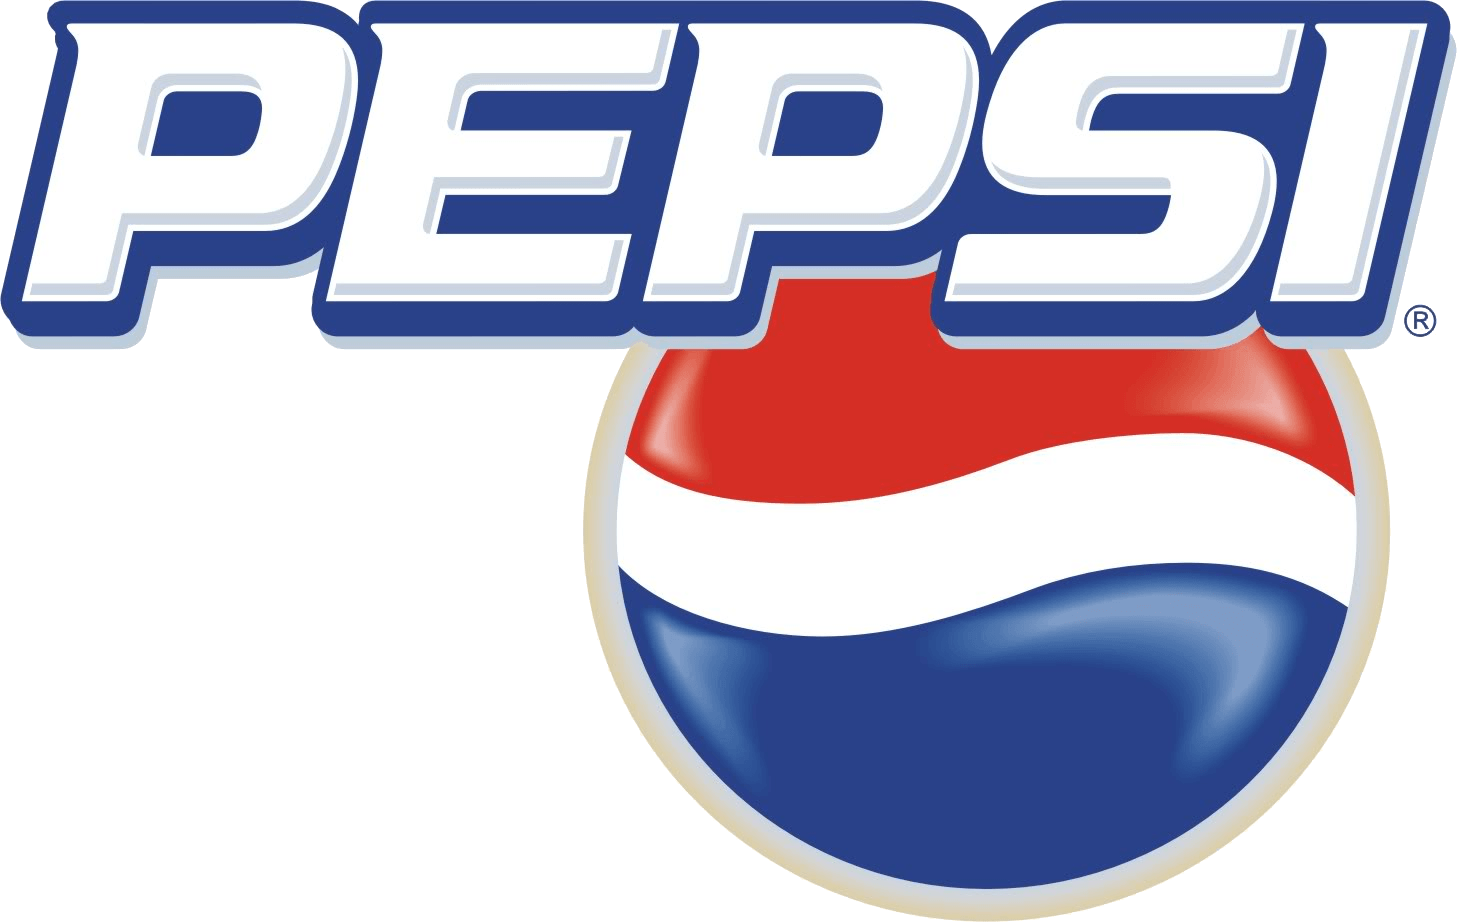 Vintage 1962 Pepsi Logo - Pepsi | Logopedia | FANDOM powered by Wikia